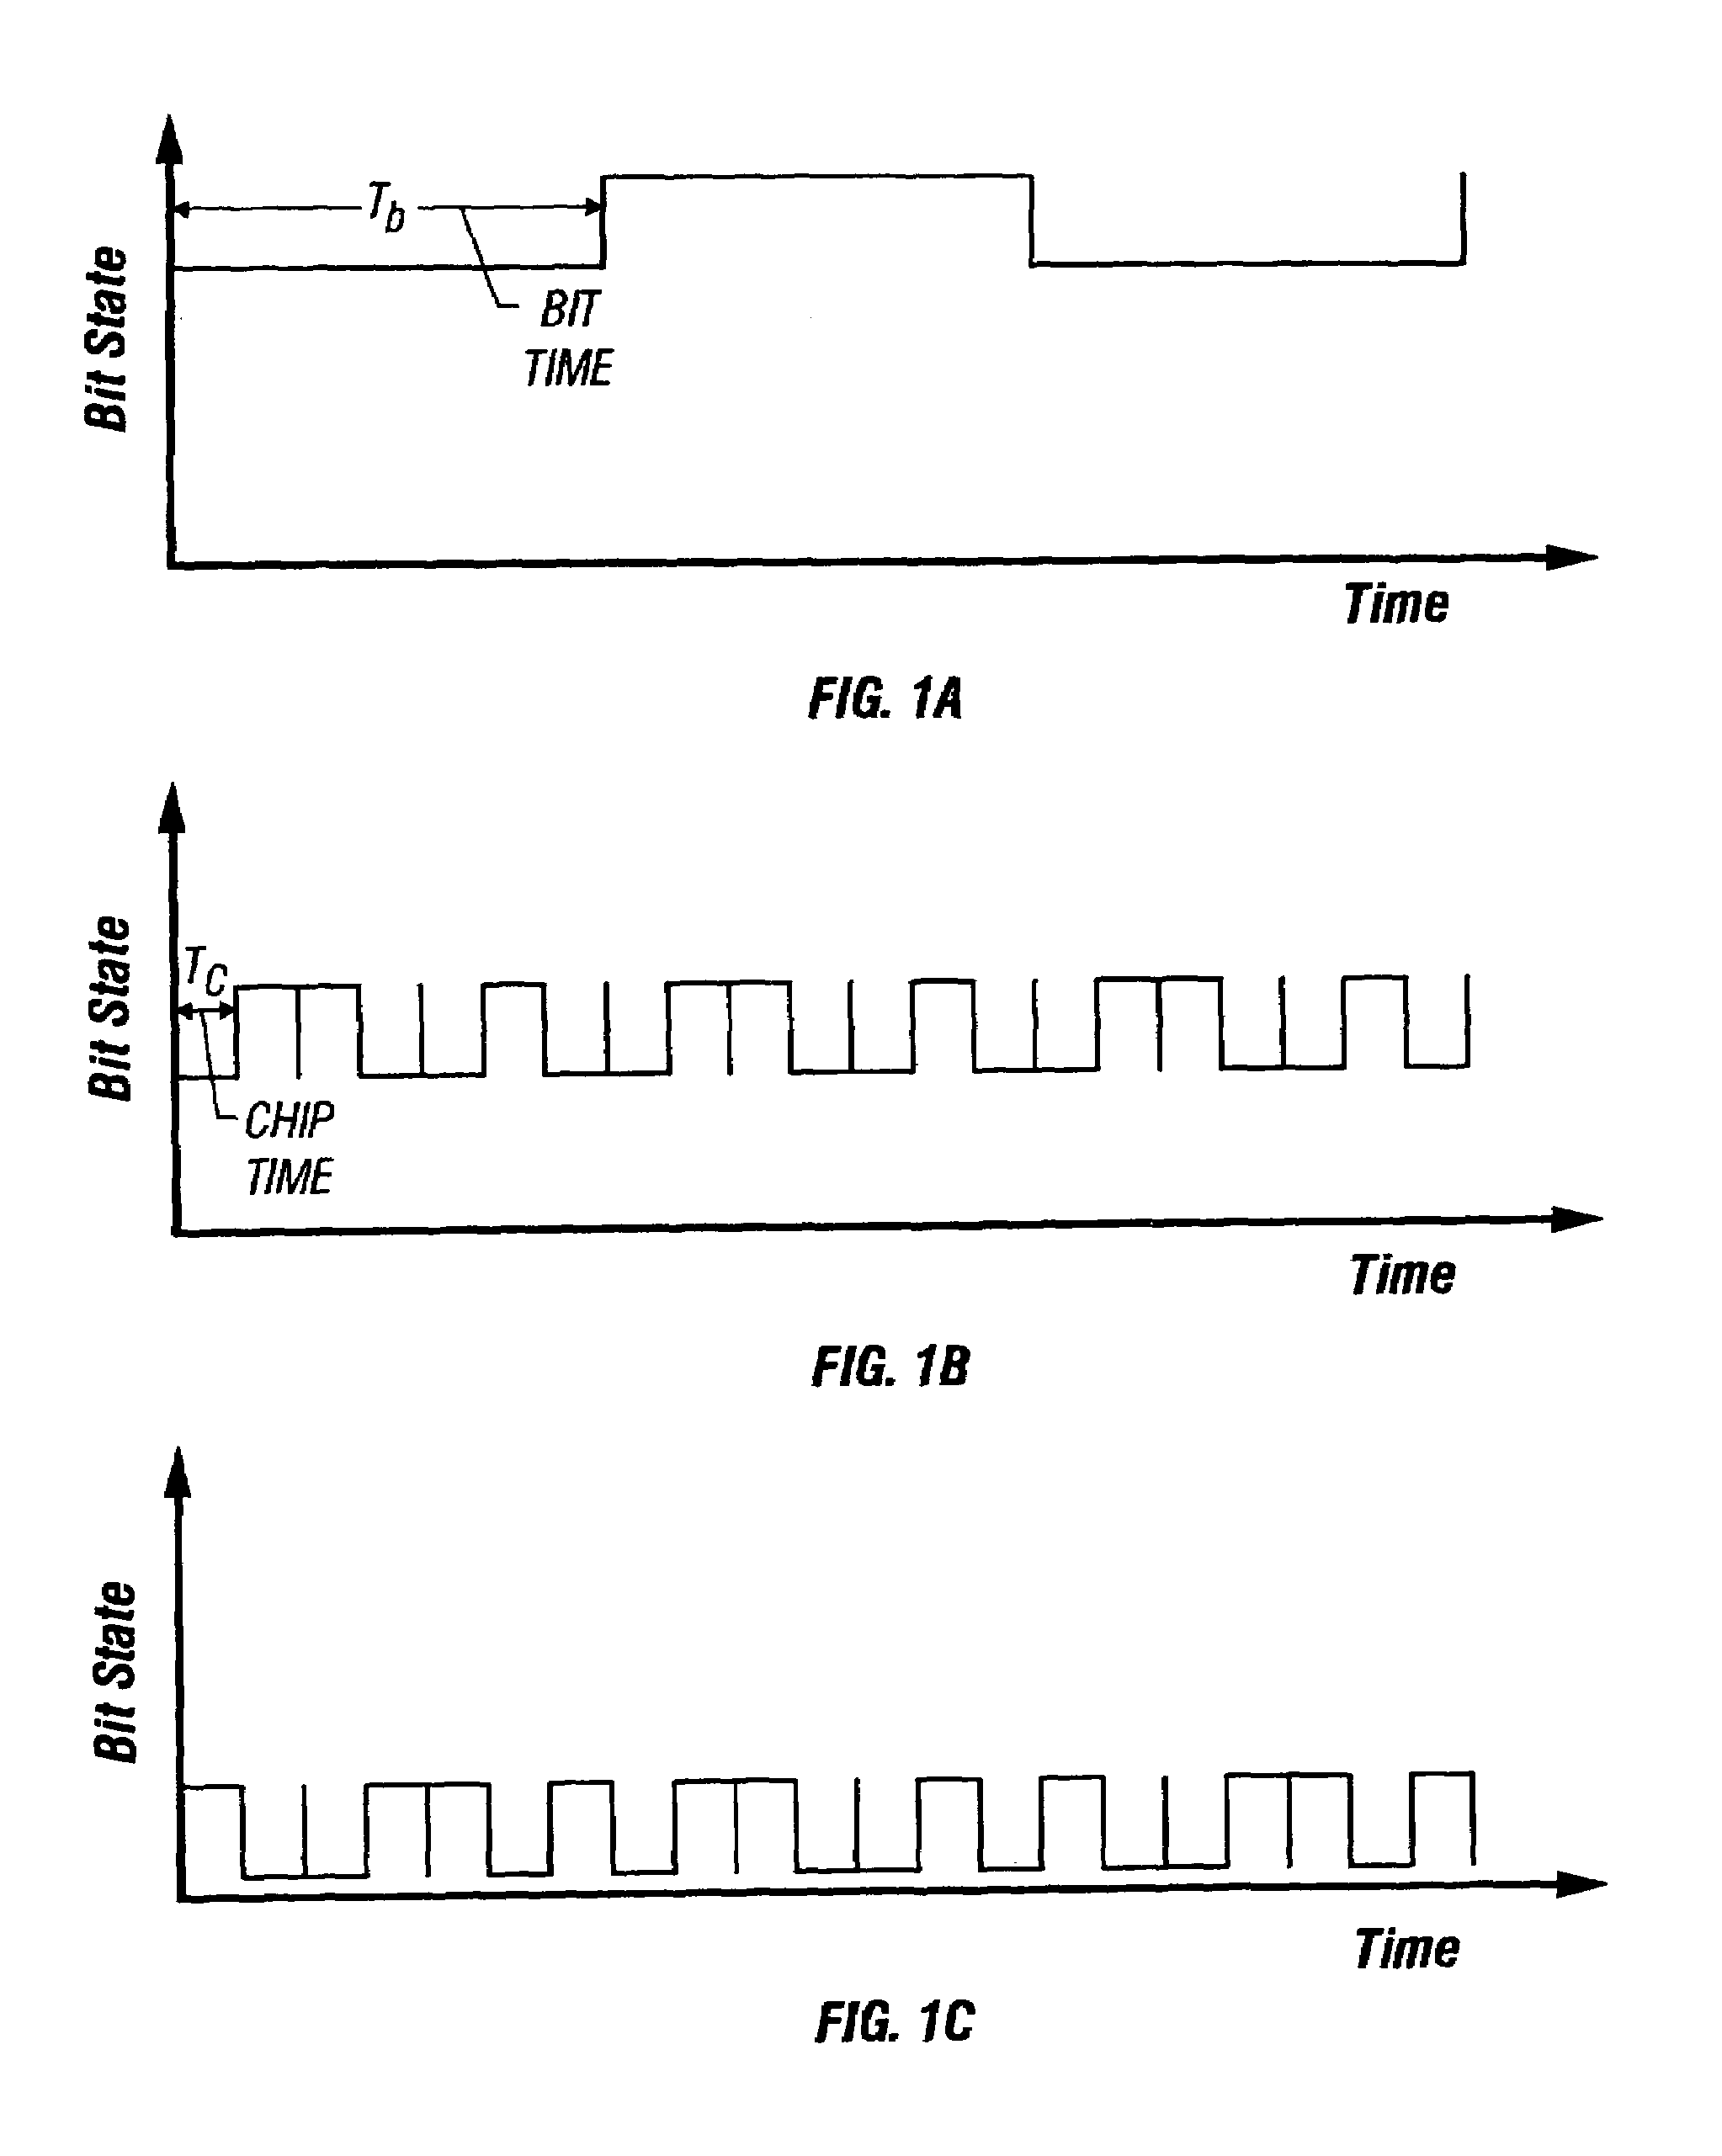 Hybrid spread-spectrum technique for expanding channel capacity